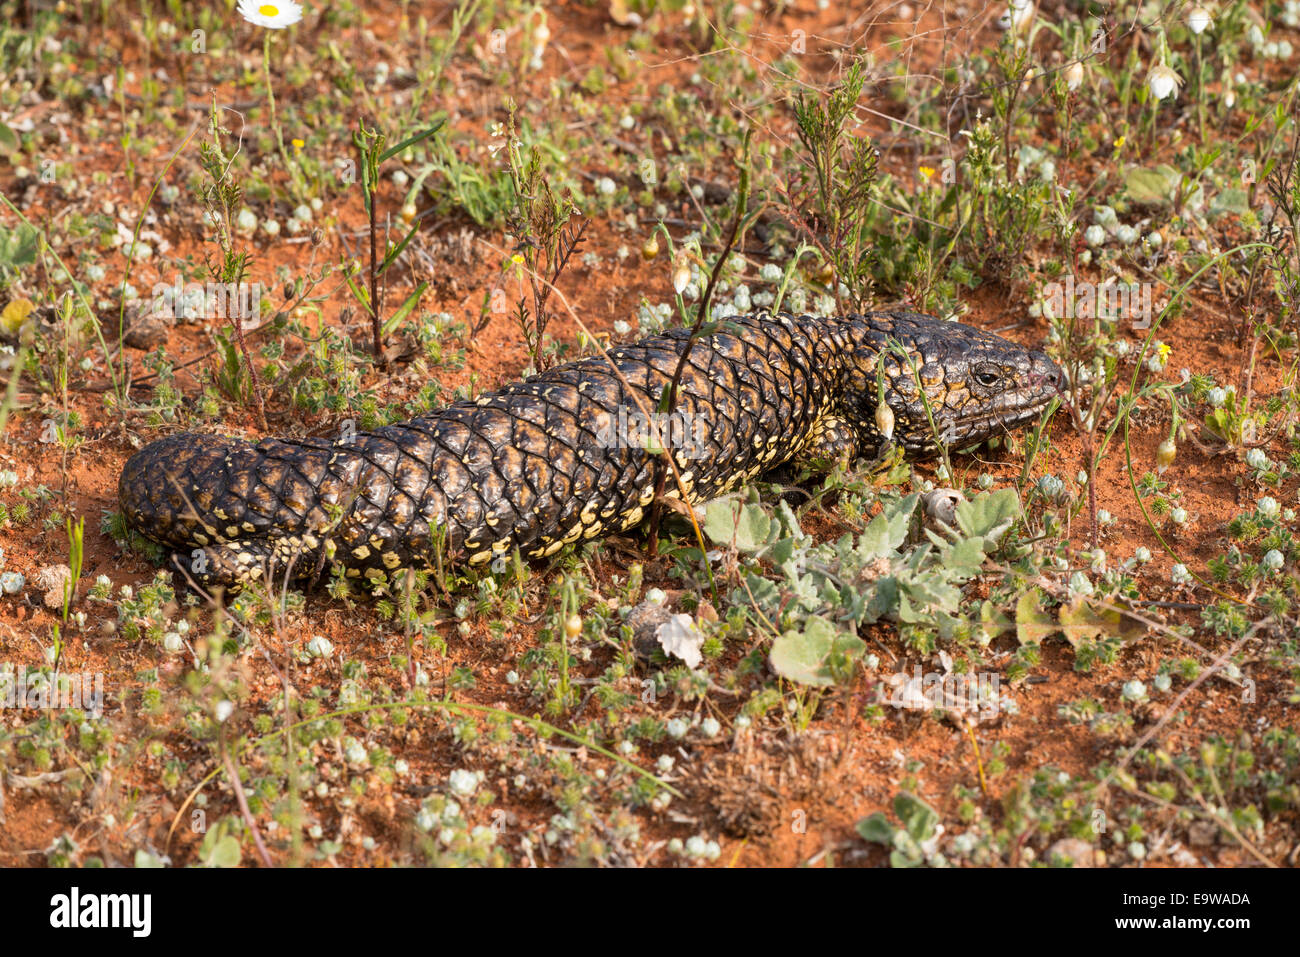 Foto di stock di una sonnolenta lizard, Gawler Ranges, Australia. Foto Stock